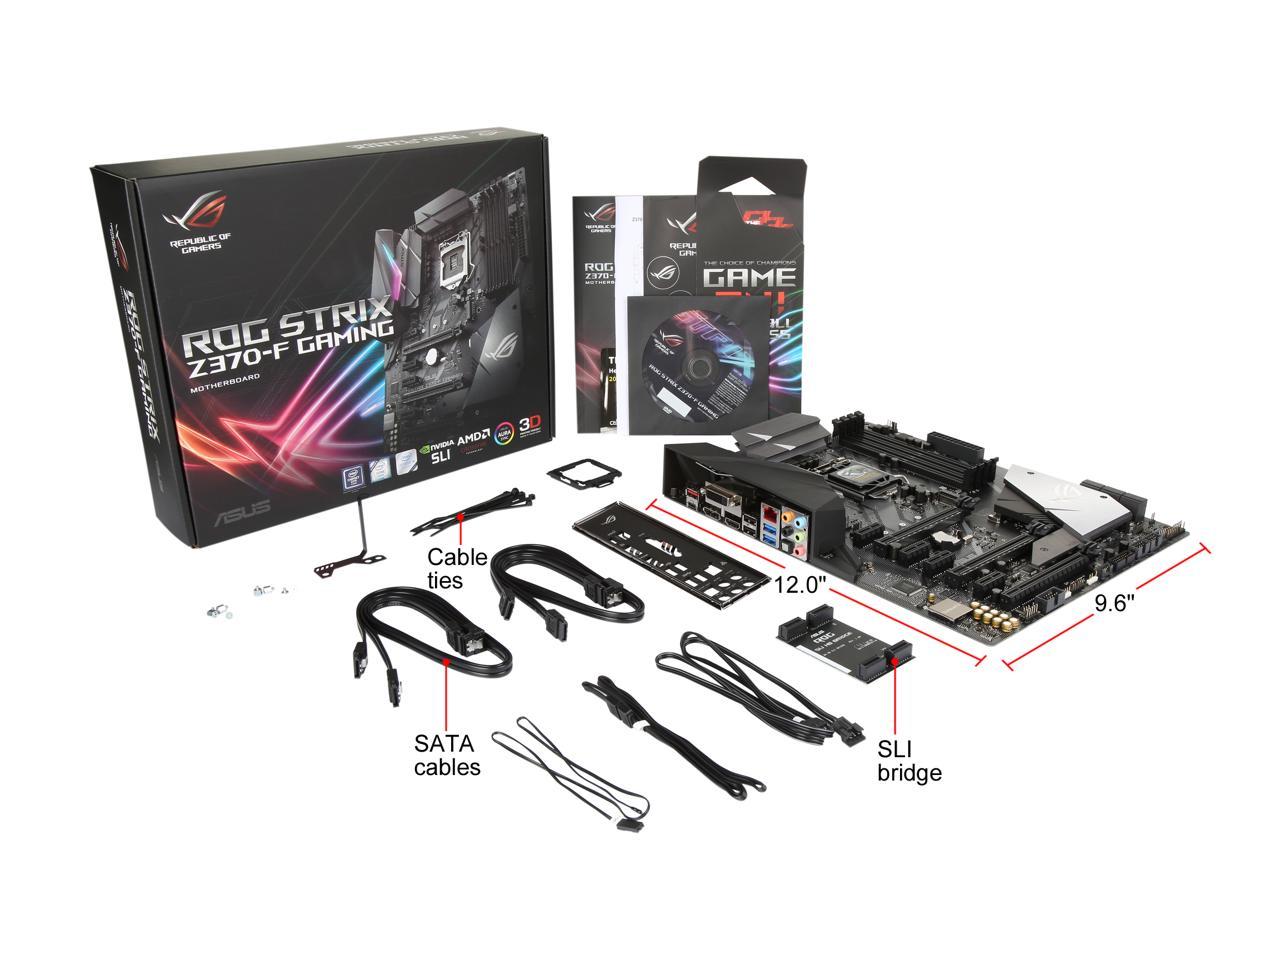 ASUS ROG Strix Z370-F Gaming LGA 1151 (300 Series) ATX Intel